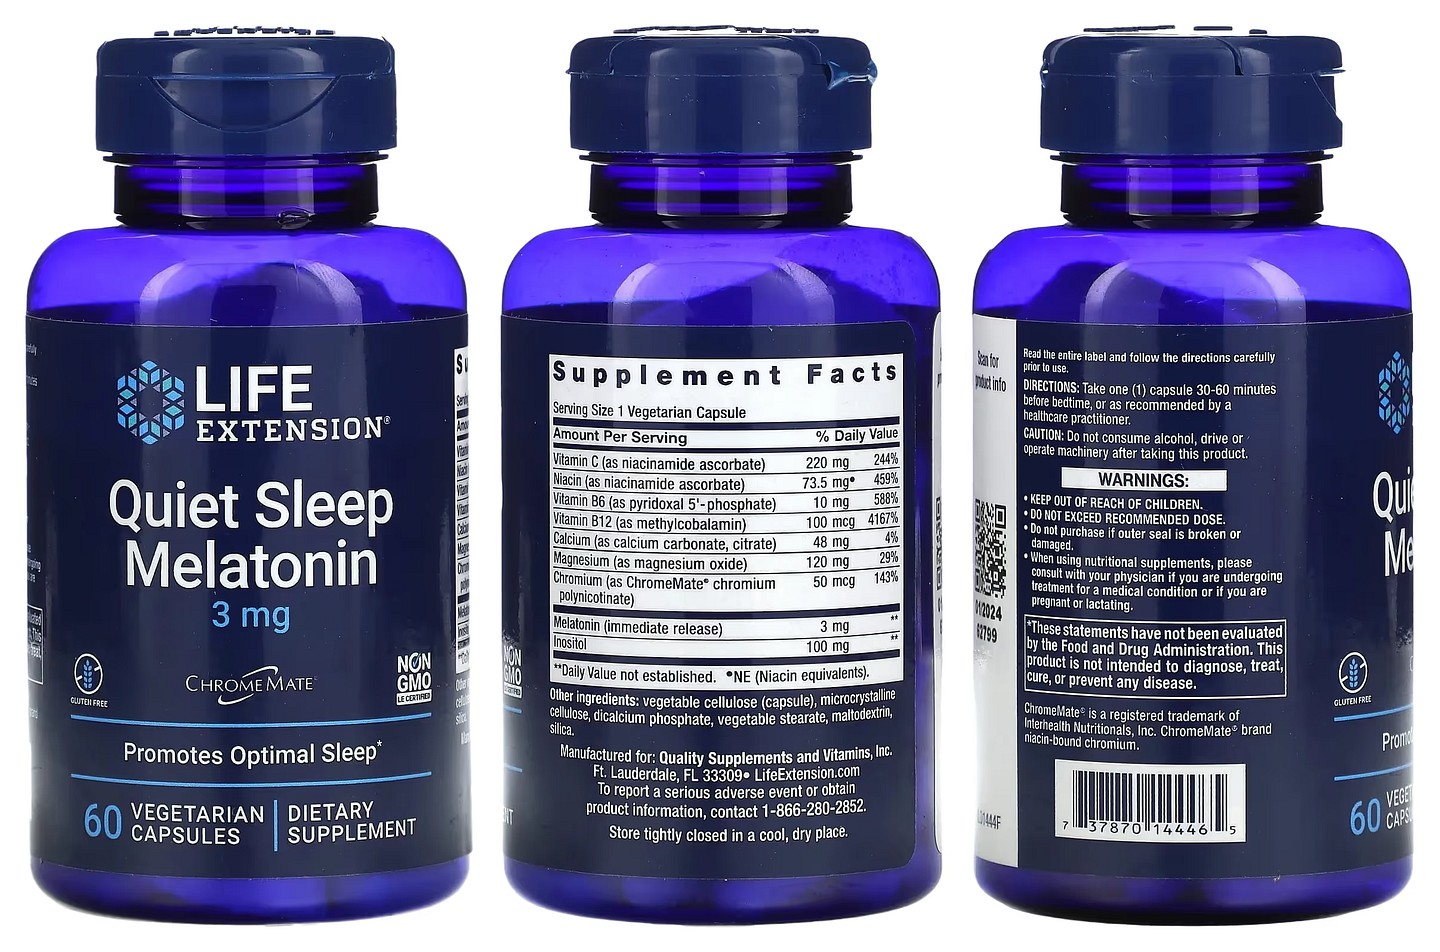 Life Extension, Quiet Sleep Melatonin packaging